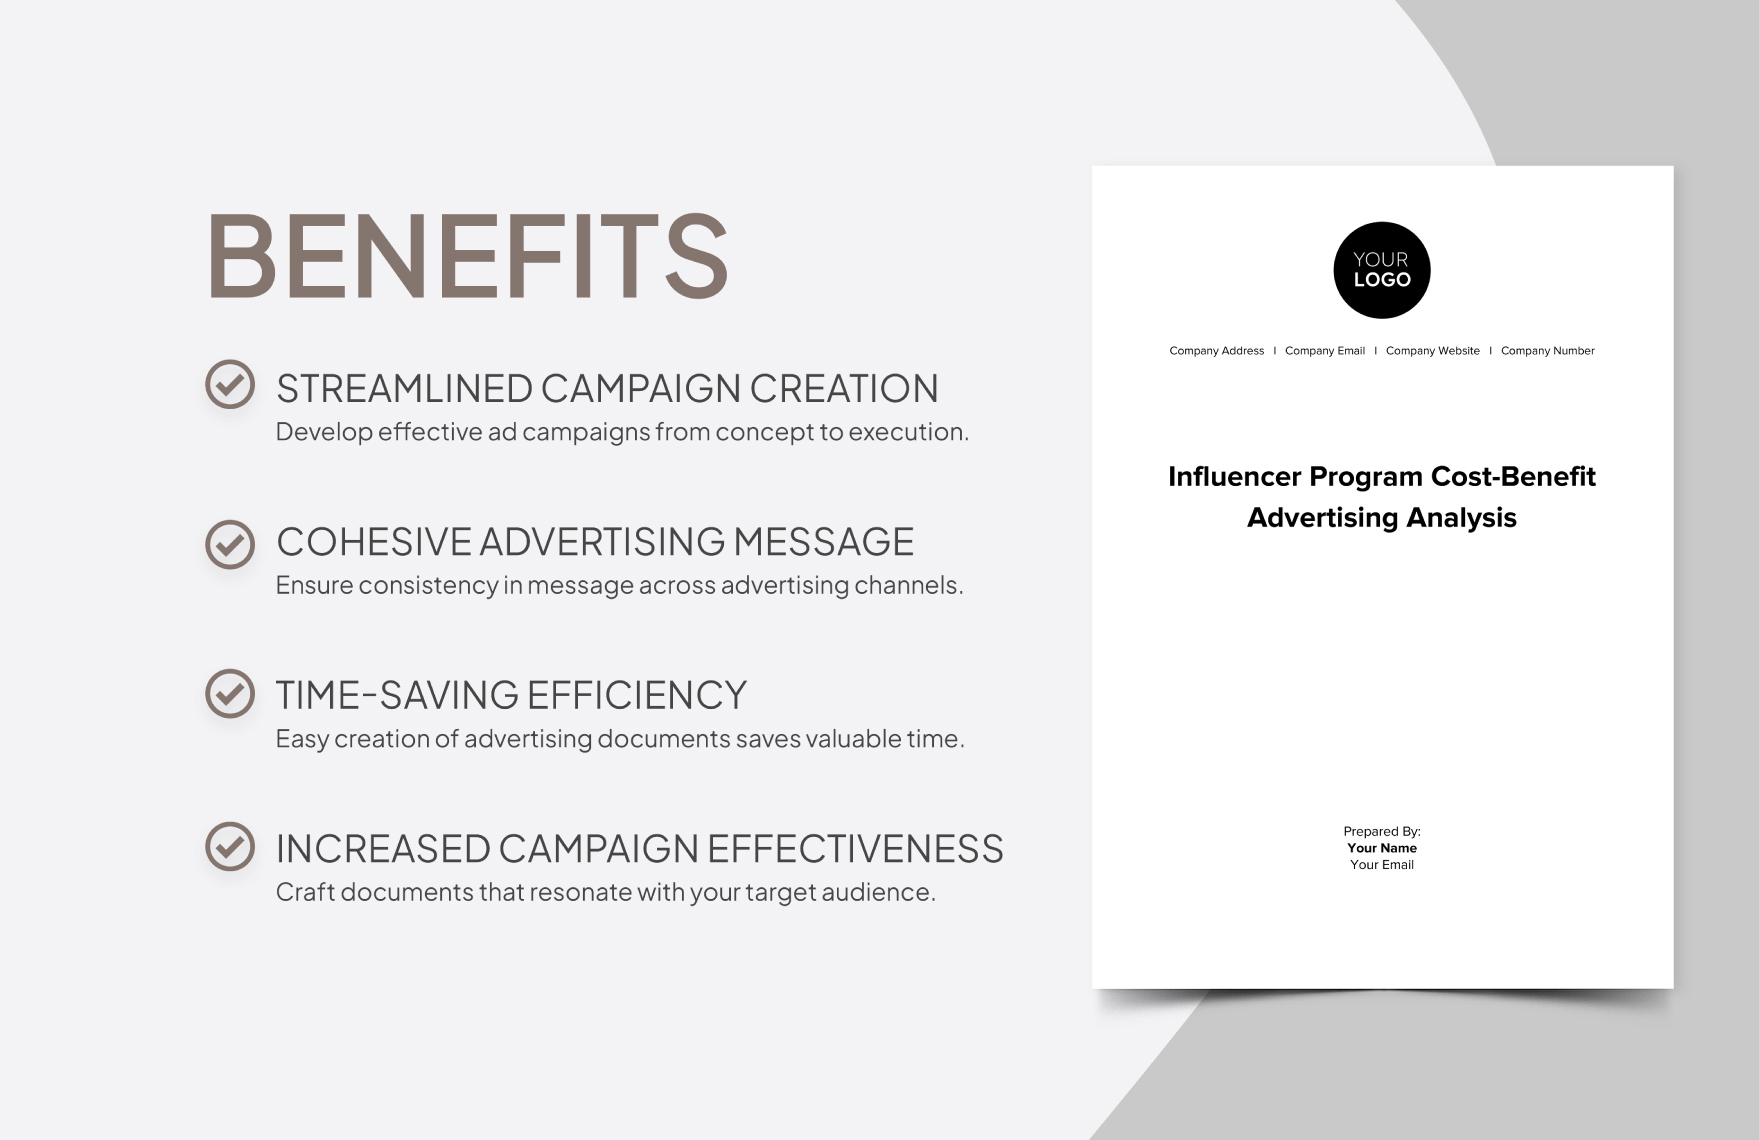 Influencer Program Cost-Benefit Advertising Analysis Template